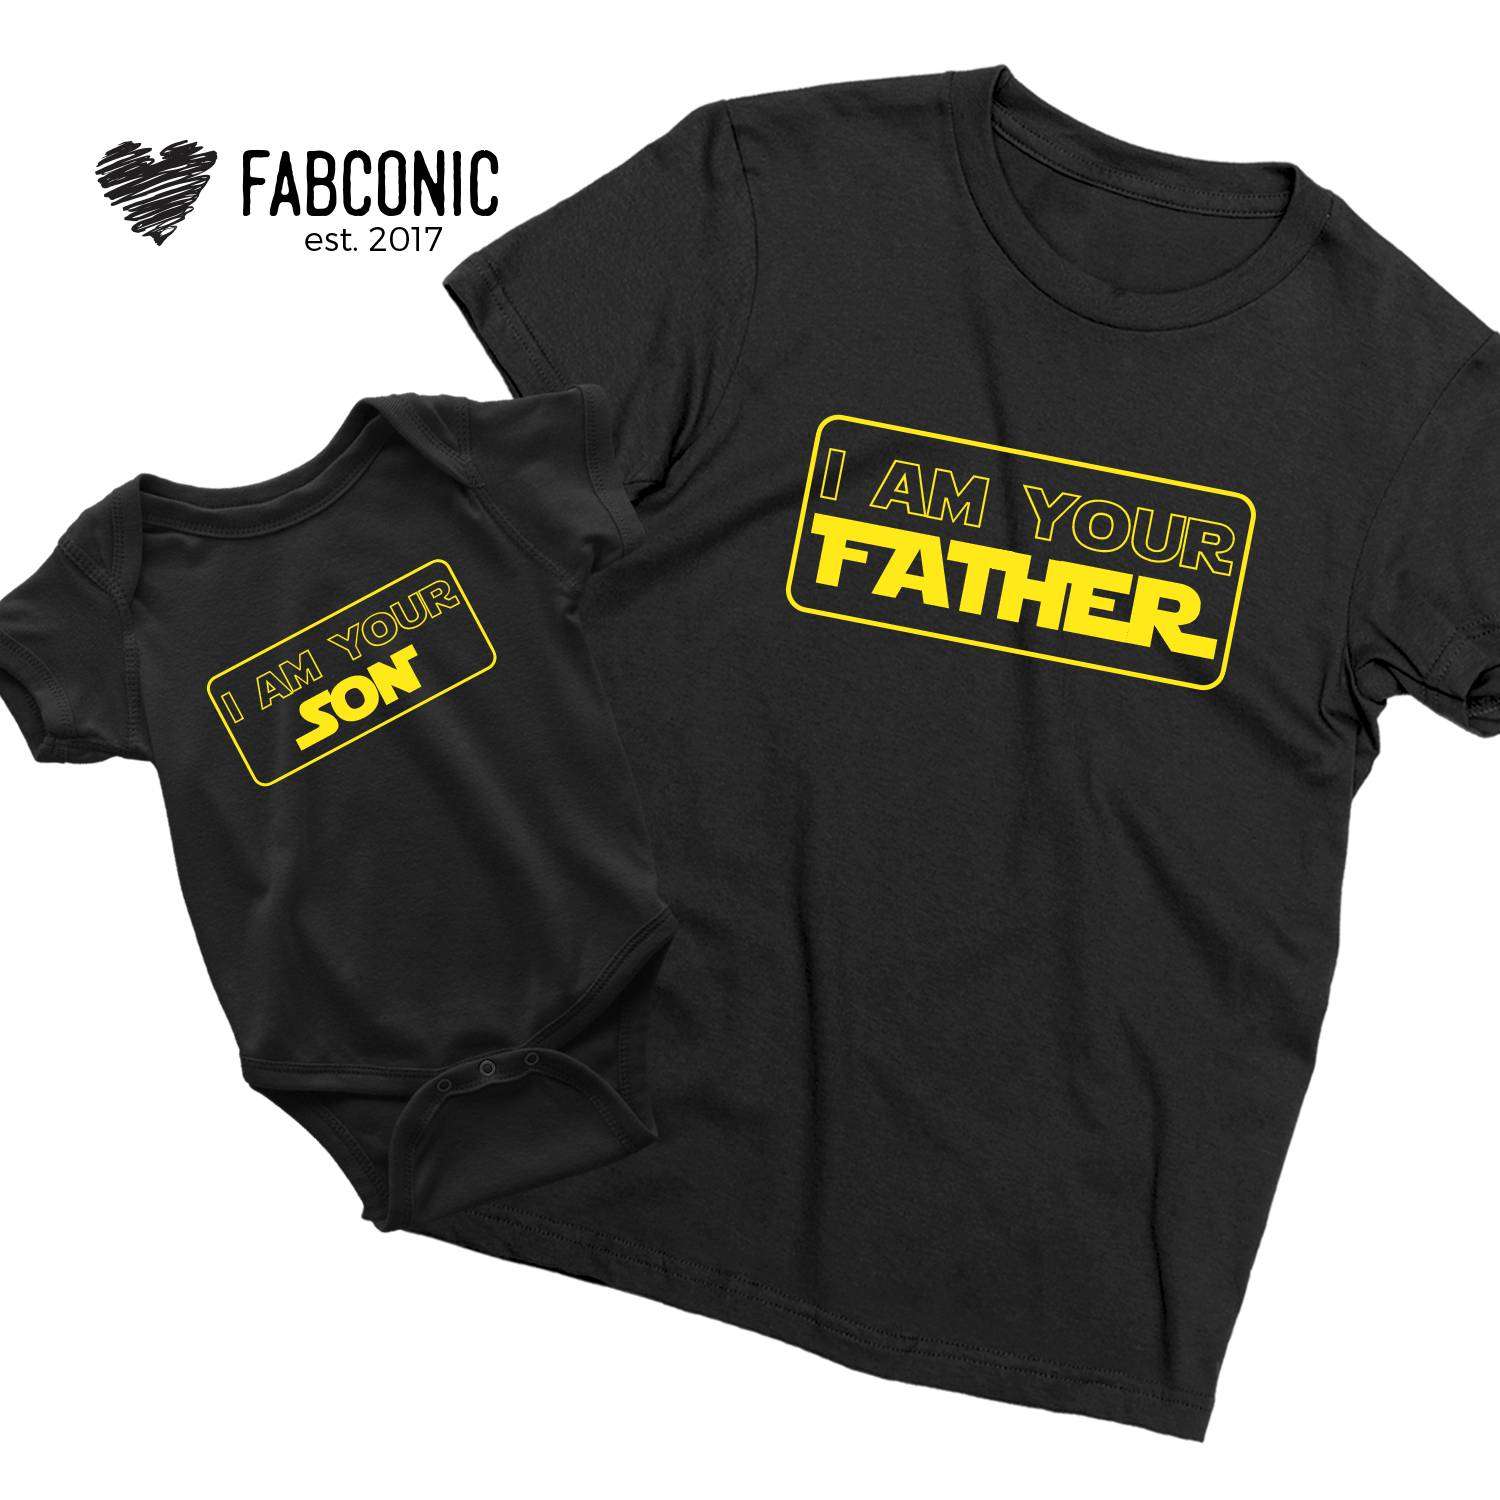 Funny Shirts Father Son Shirts Star Wars Shirts Family 